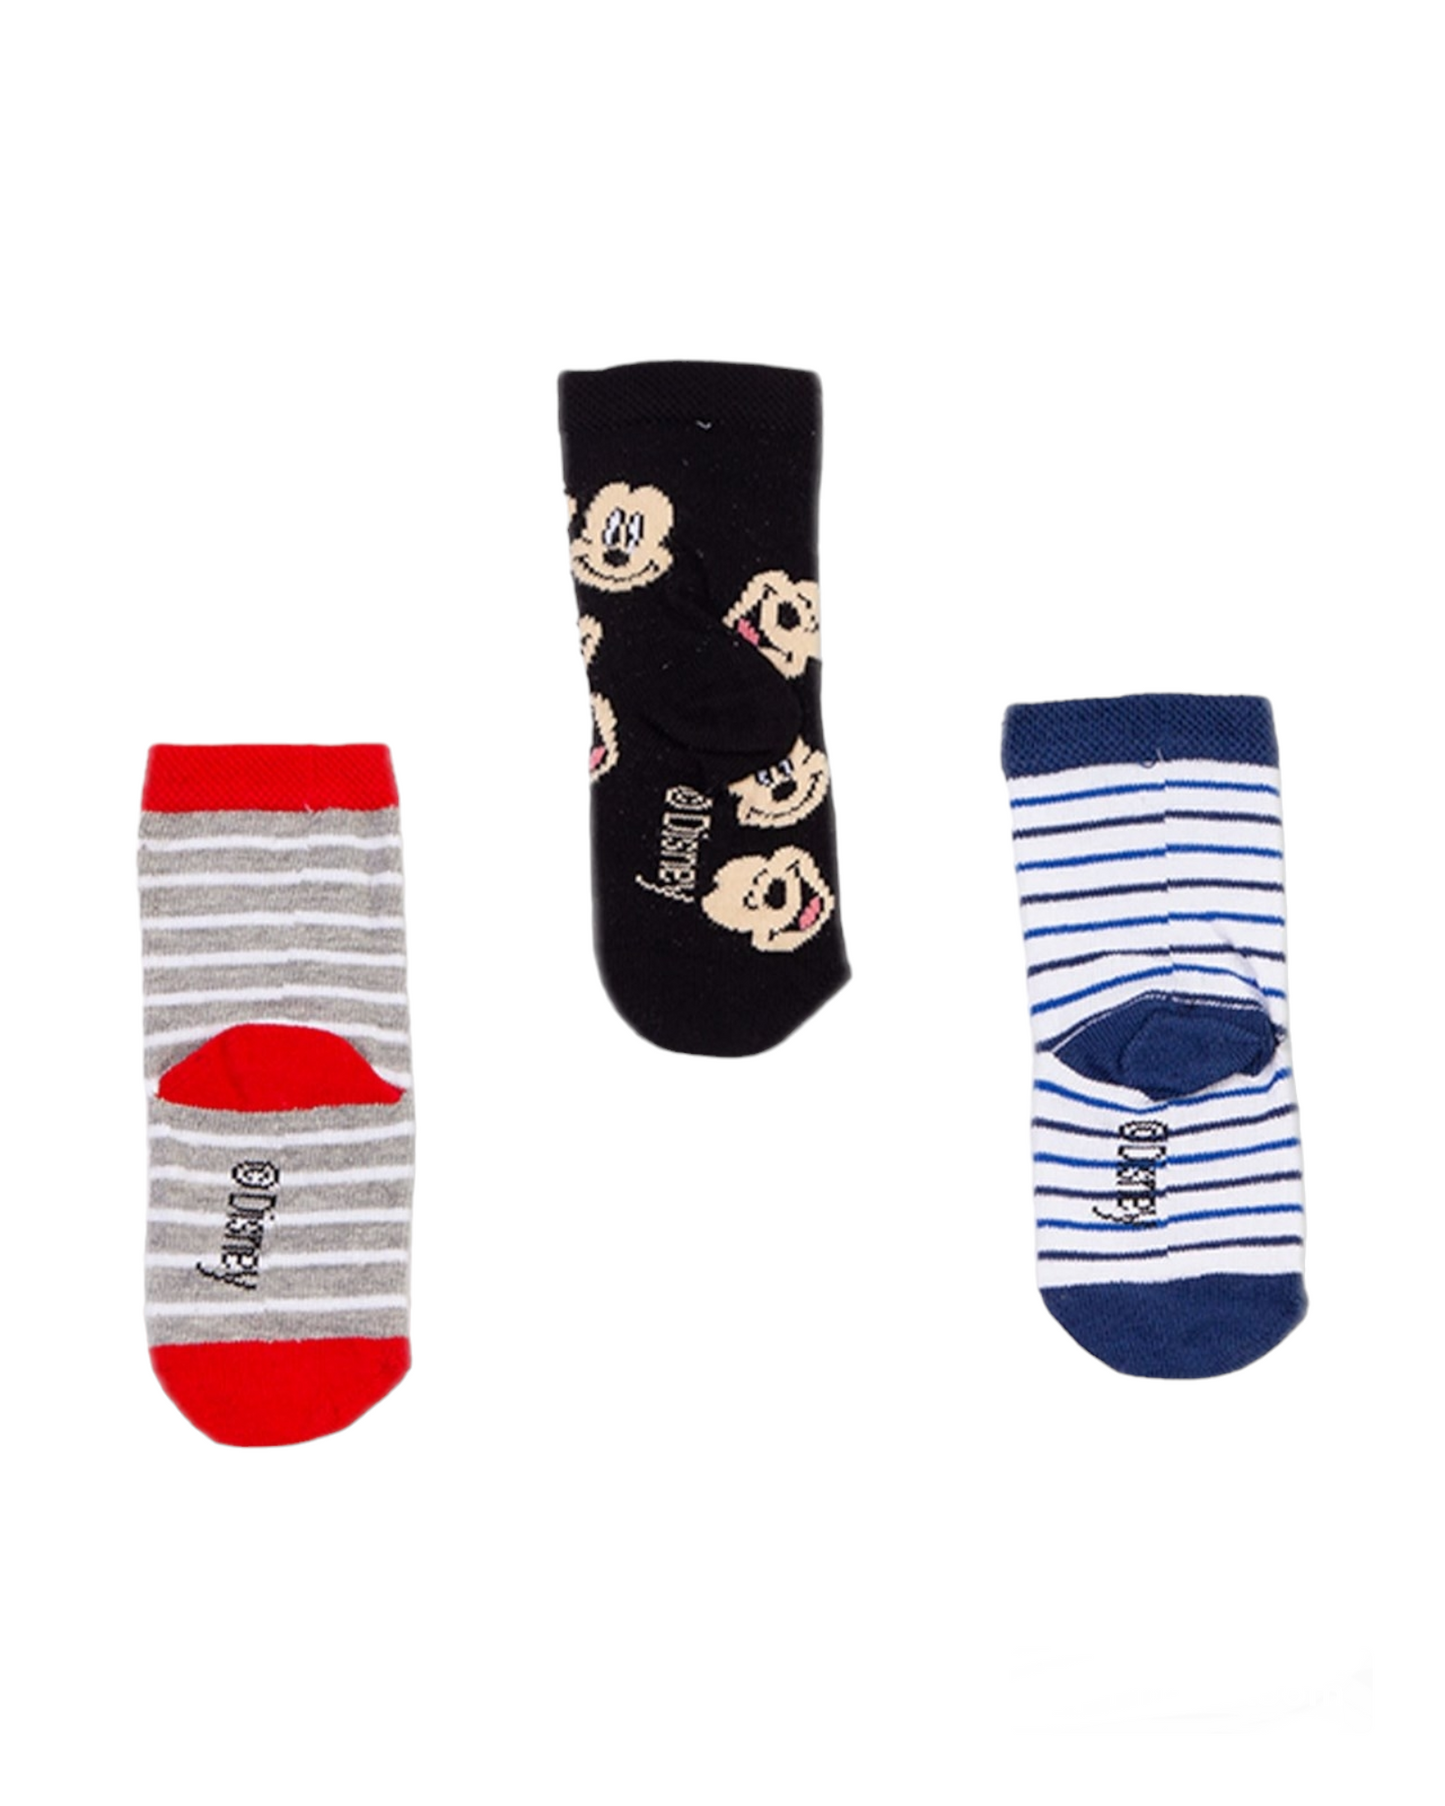 Disney Mickey Mouse Baby Socks